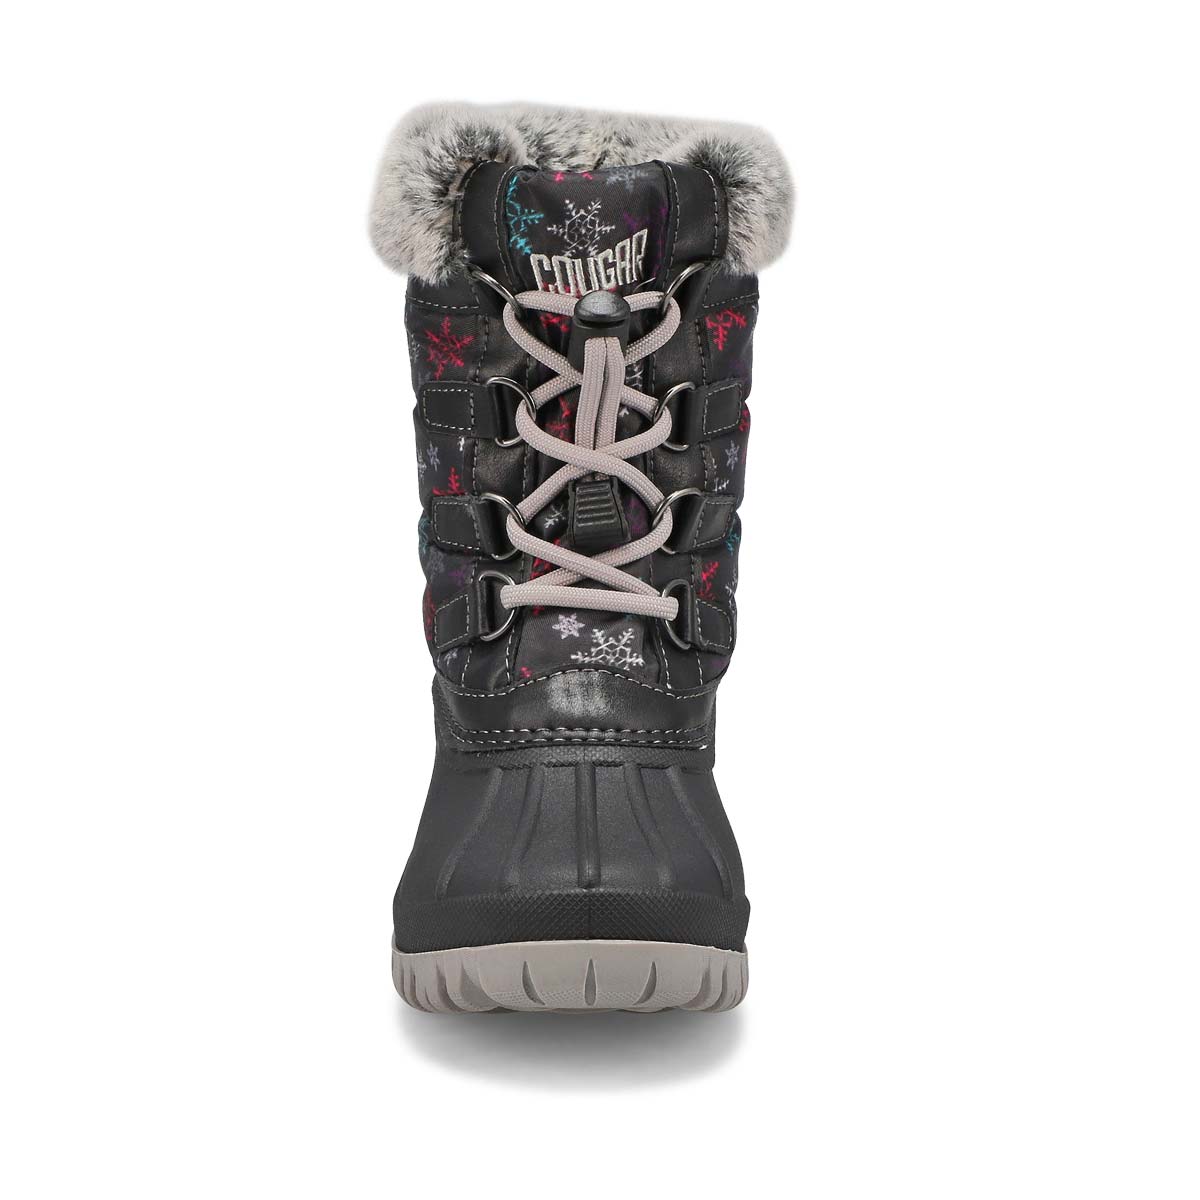 Girls' Carly Waterproof Winter Boot - Black